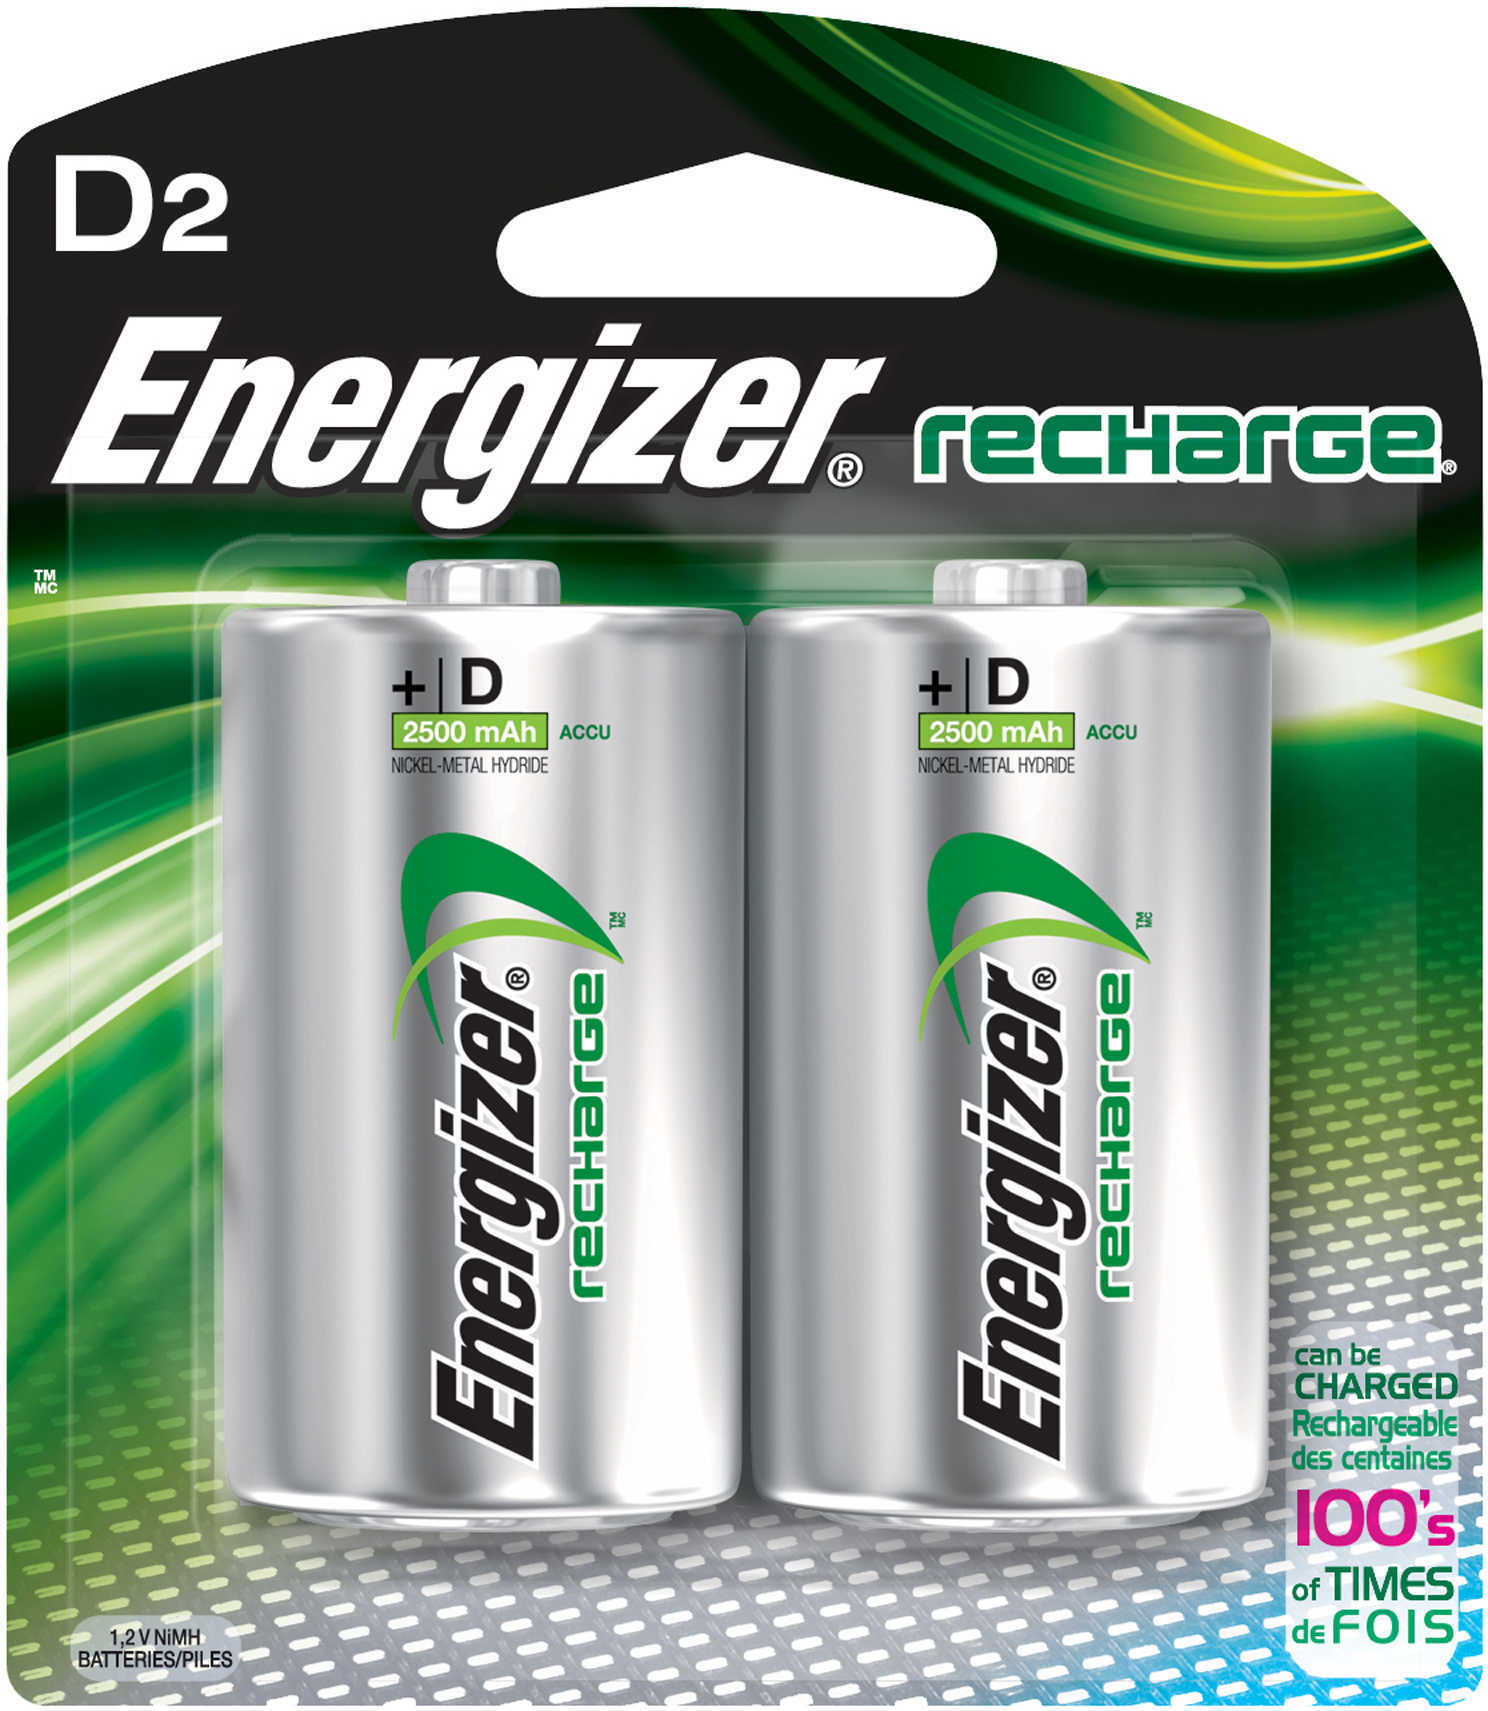 Energizer Rechargeable Batteries NiMH D 2500 mAH (Per 2) NH50BP-2